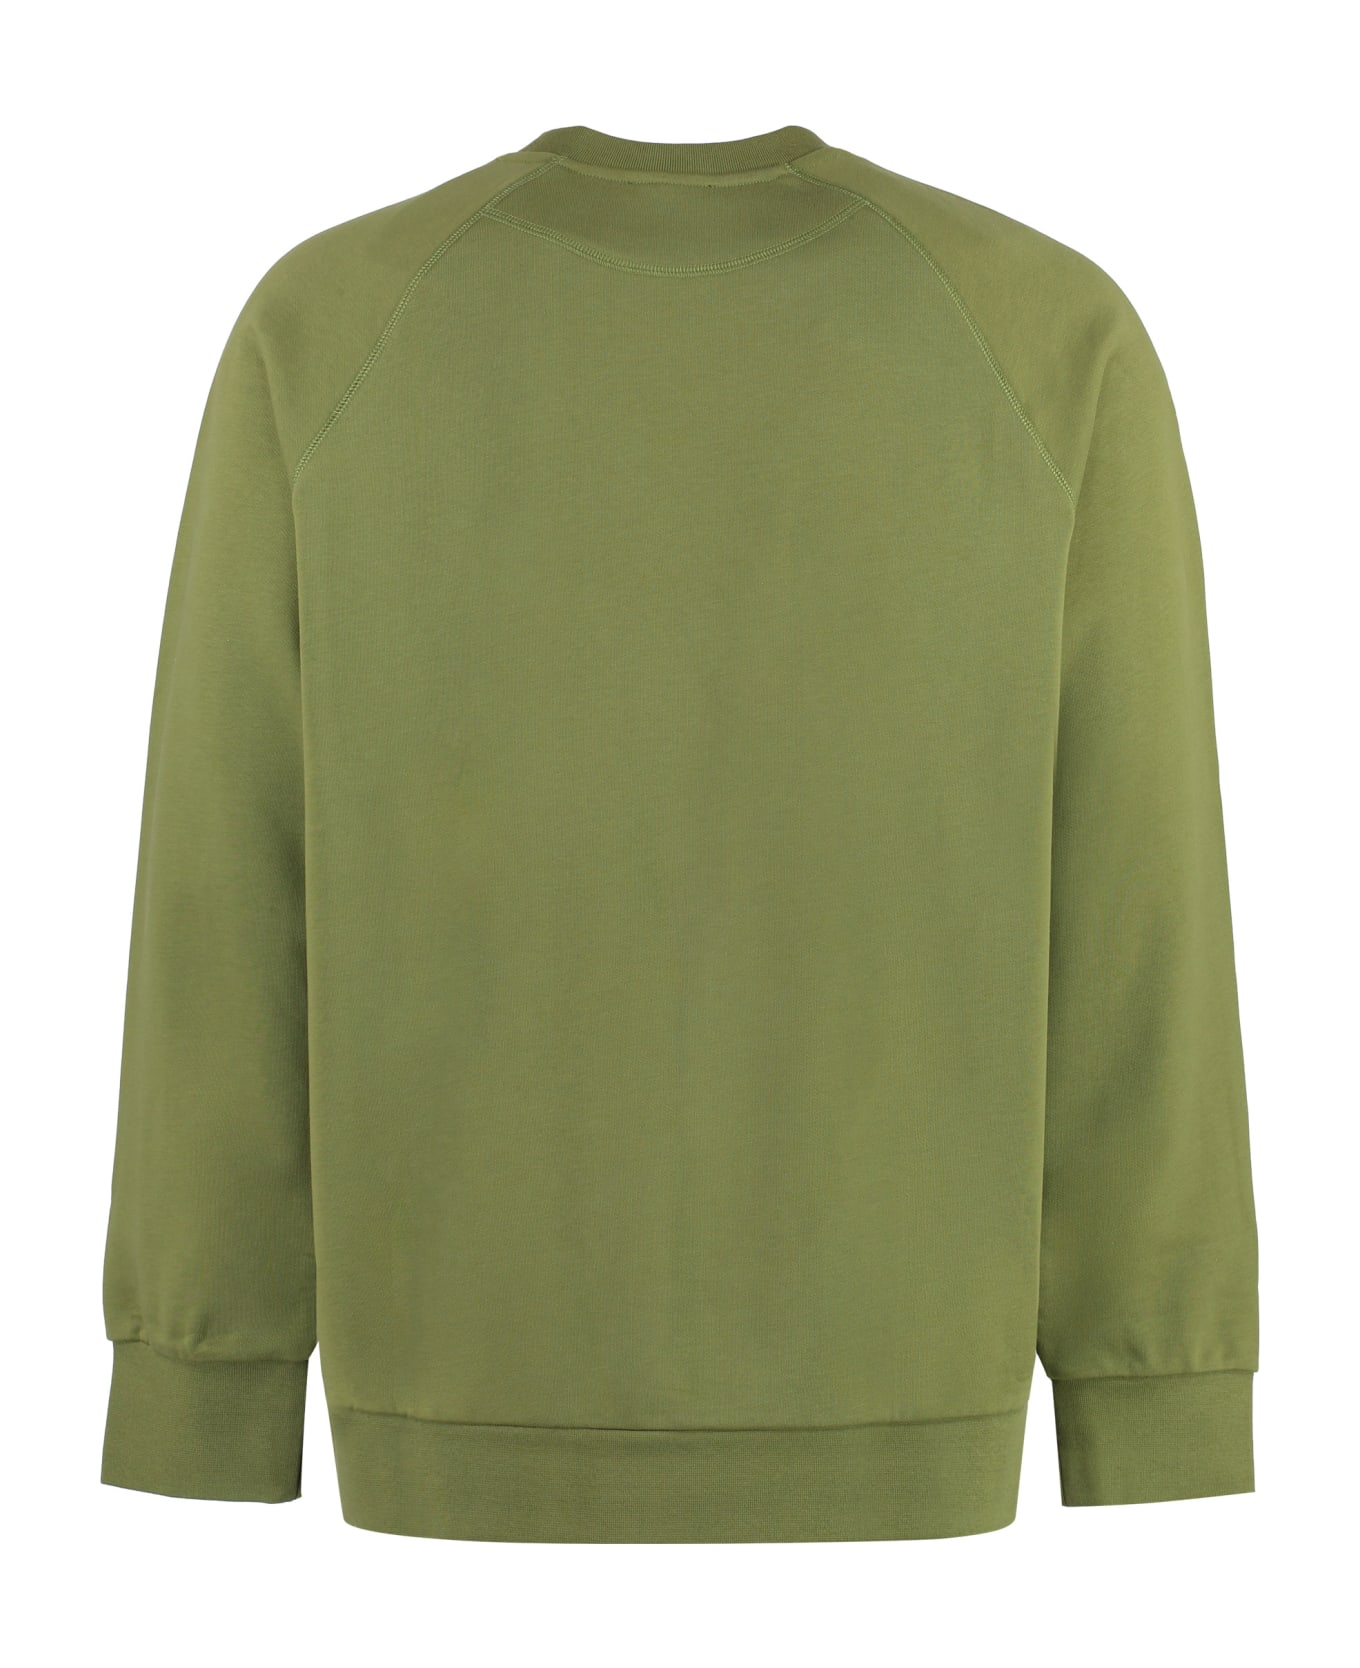 A.P.C. Cotton Crew-neck Sweatshirt - green フリース